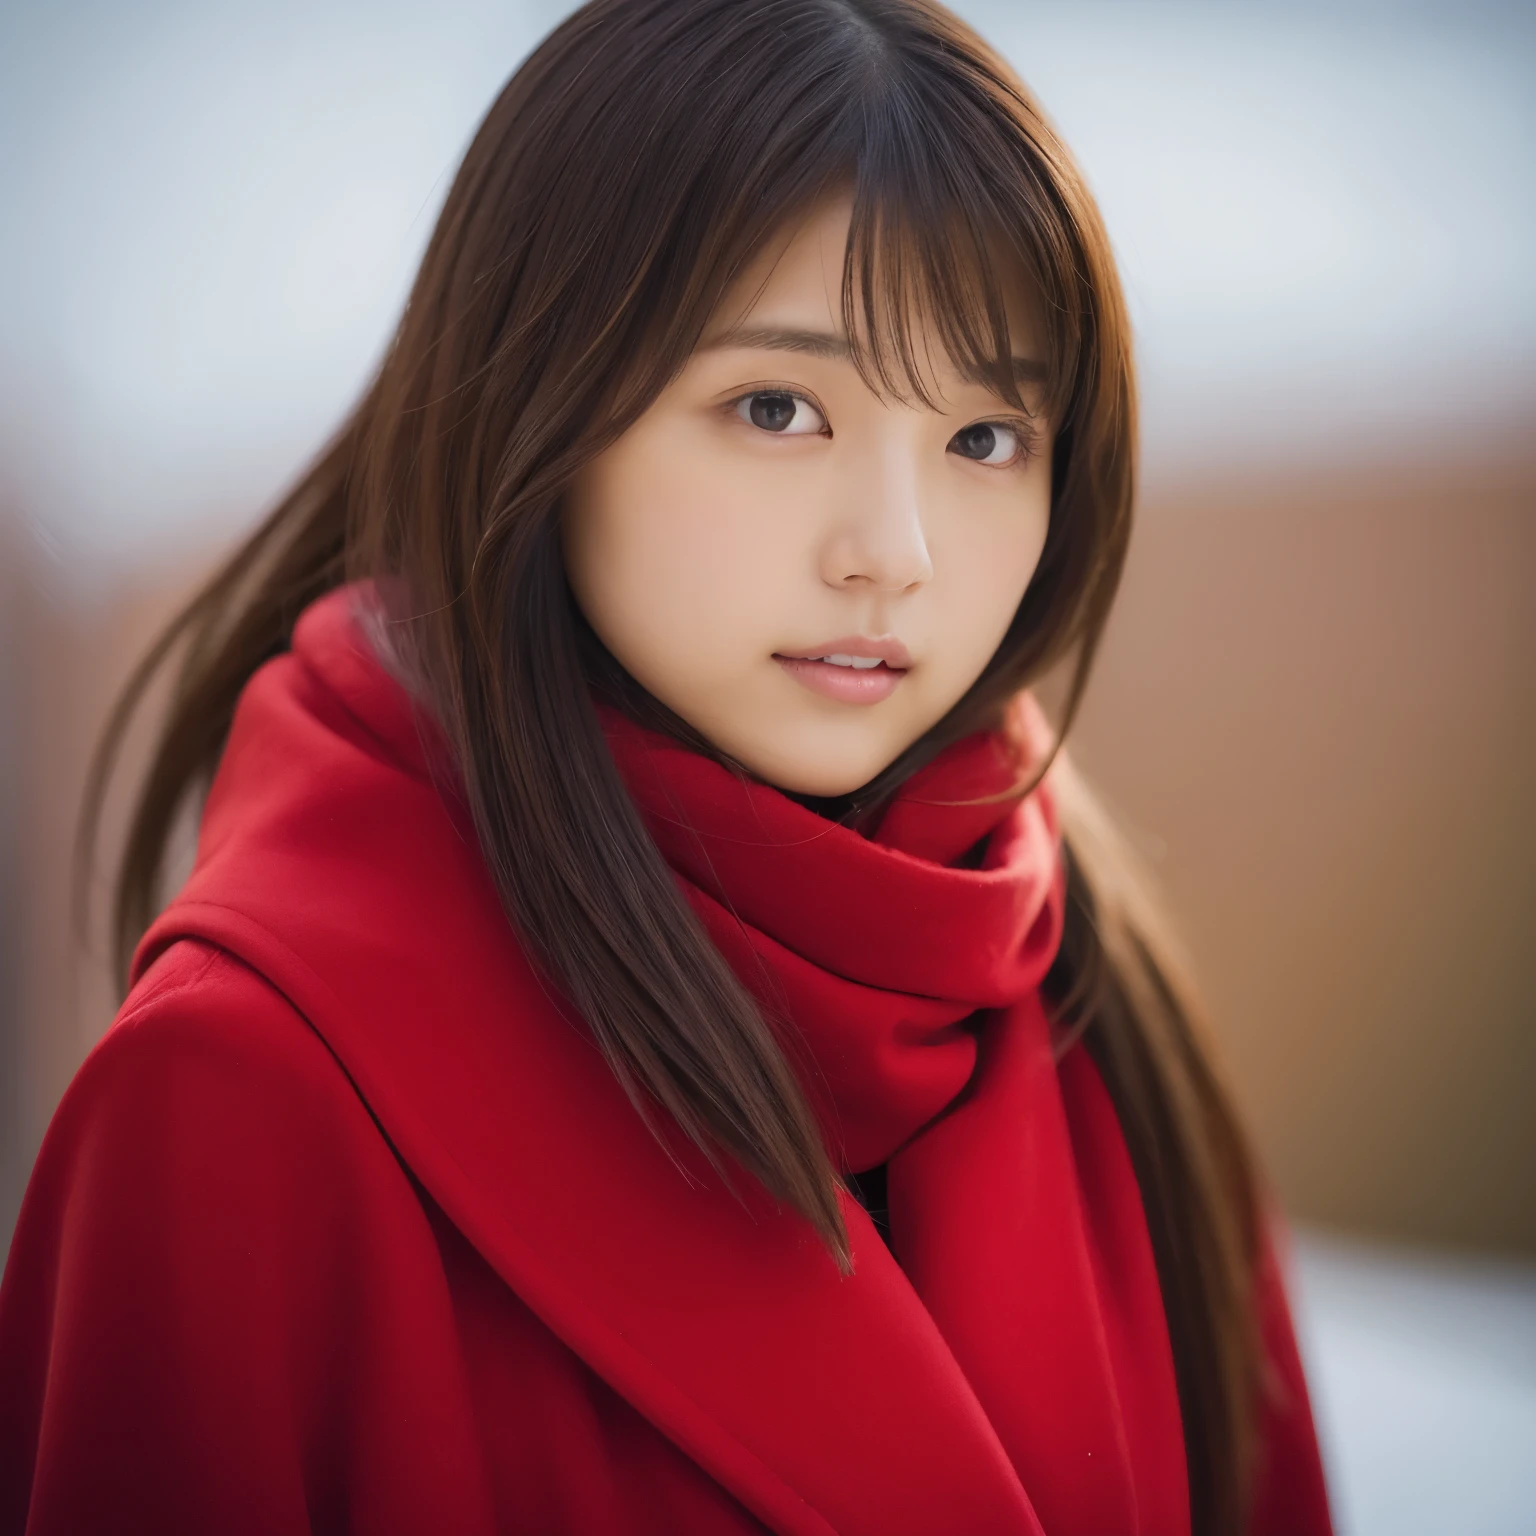 There is a woman in a red coat and a red scarf, Shin Jin Young, Choi Hong Hwa, sung by janice, Shahi, That&#39;s a cute Korean face, Nam Jae Young, Chiho, face photo profile picture, sun yunjoo, Ulzzang, Lee Ji Eun, Lee Ji Eun, she has a cute face